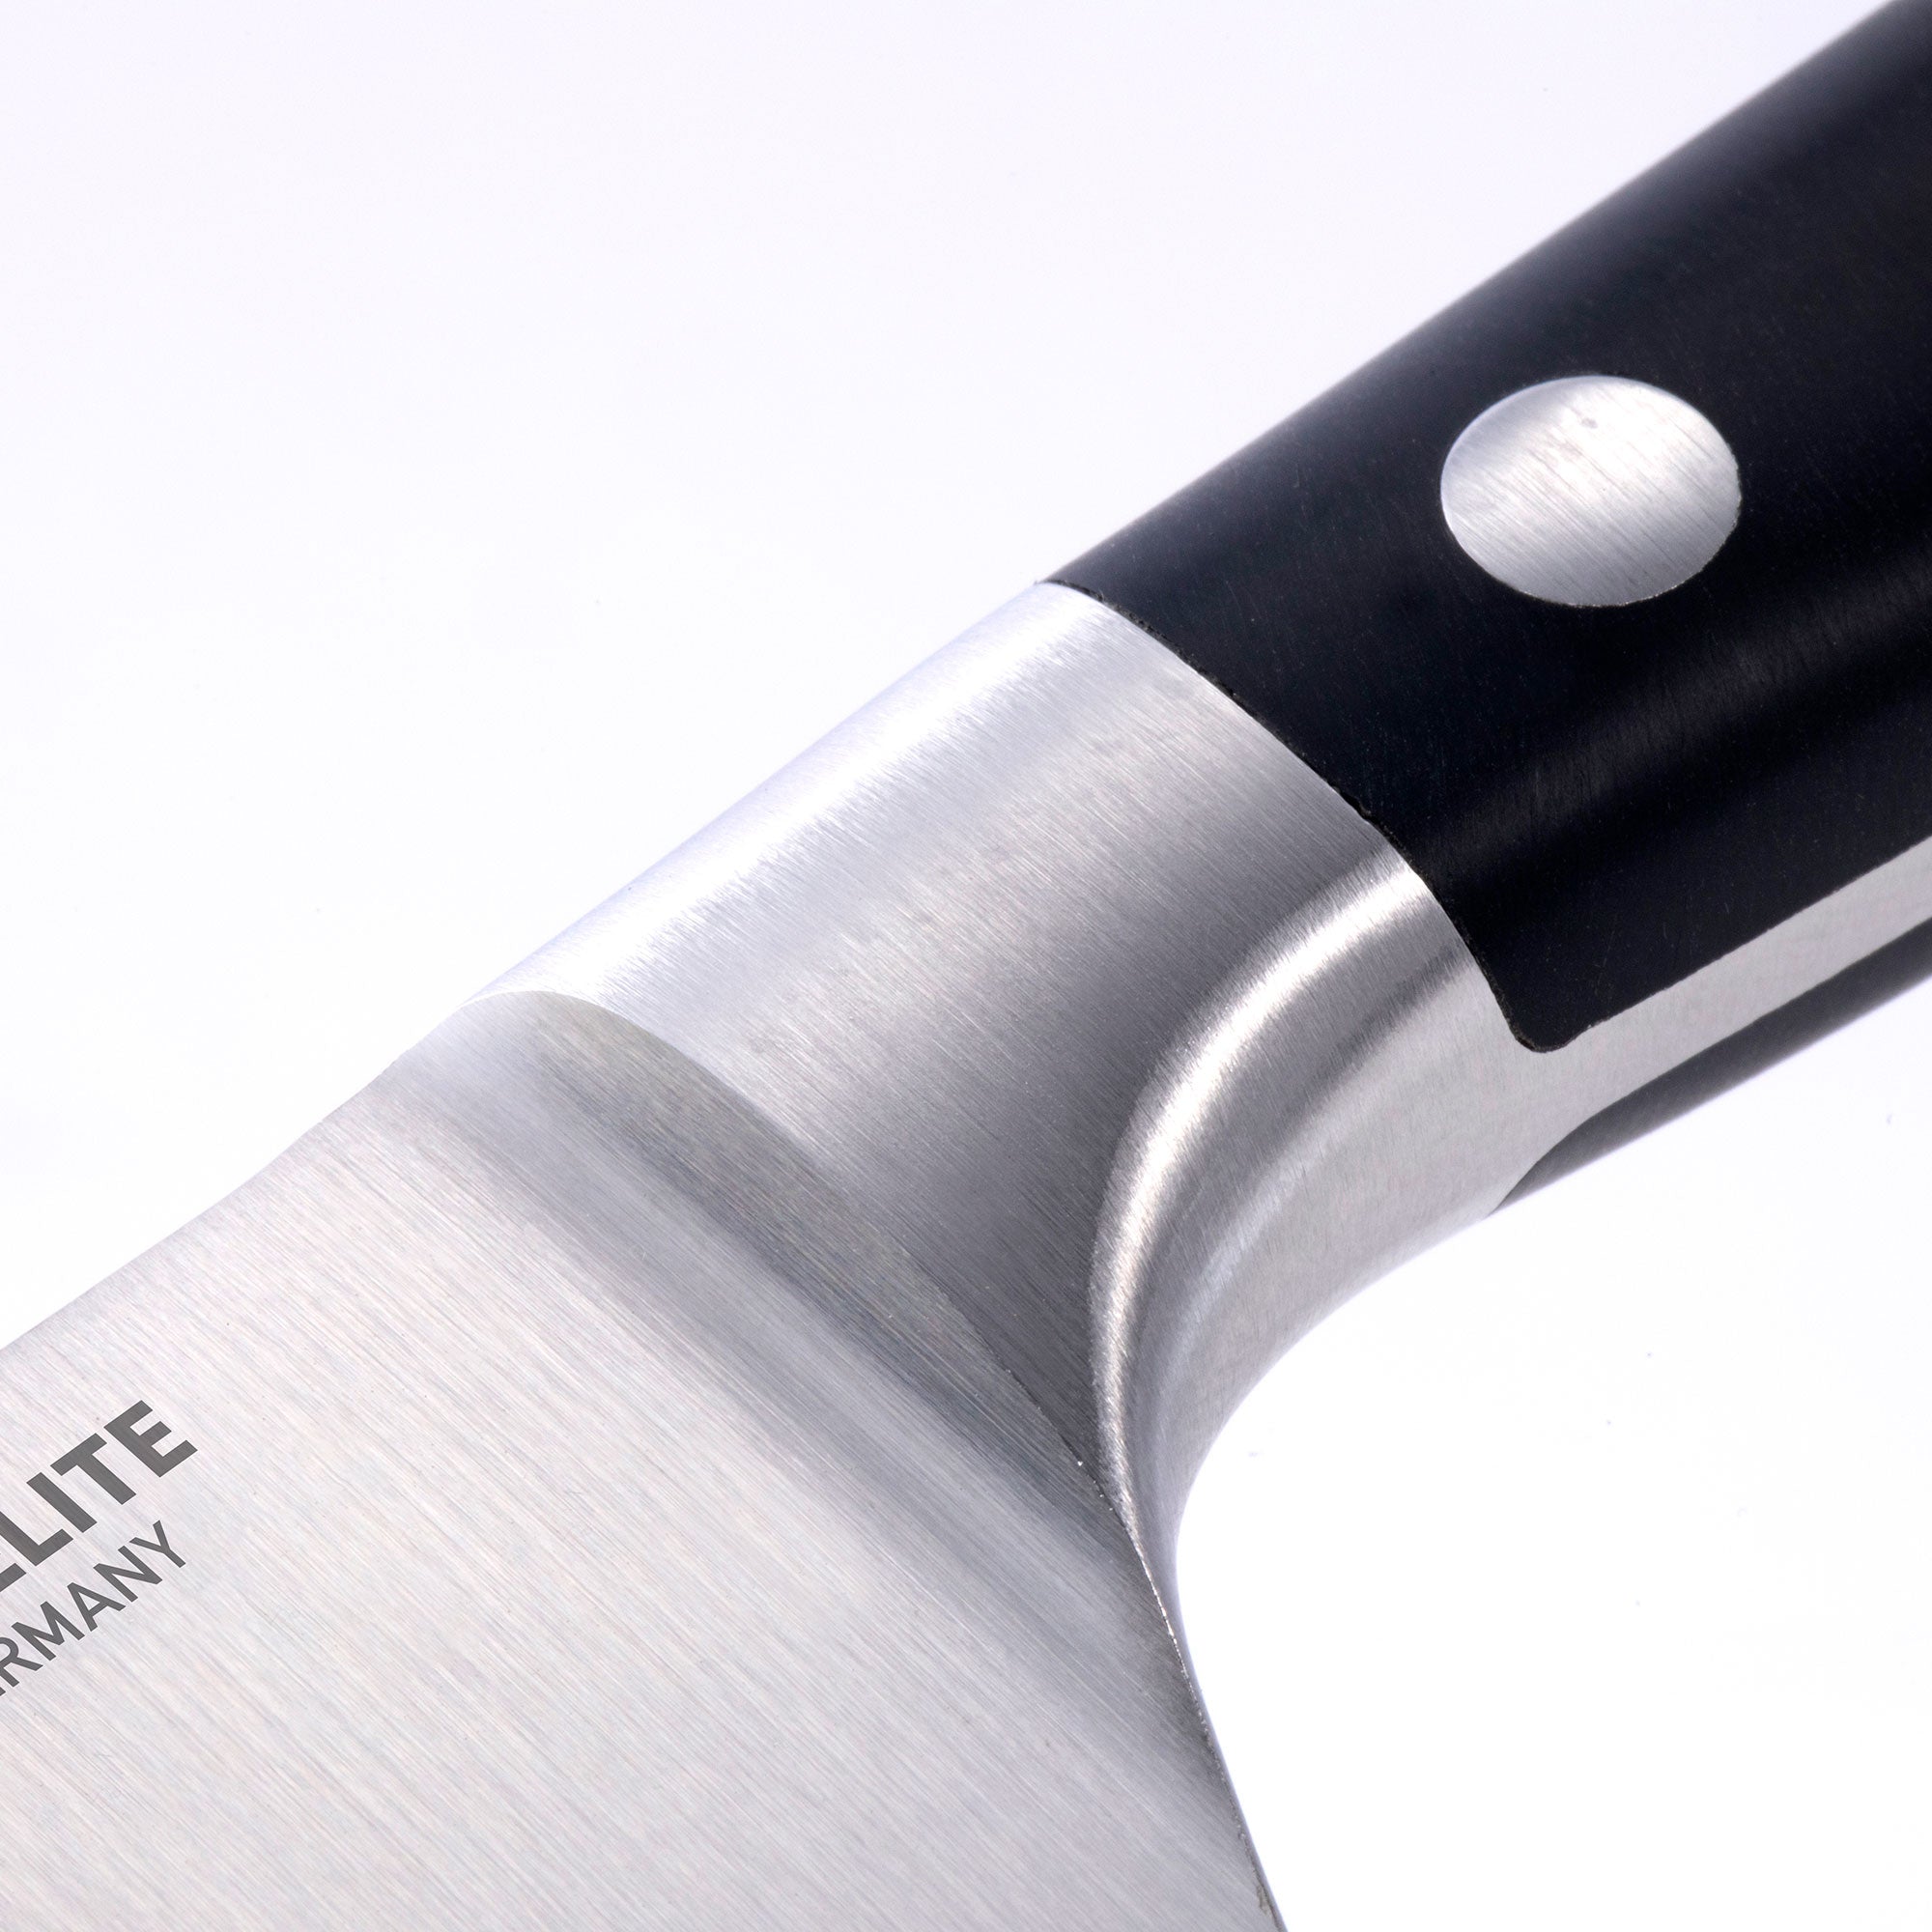 Messermeister Meridian Elite Stealth 6 Inch Chef's Knife - E/3686